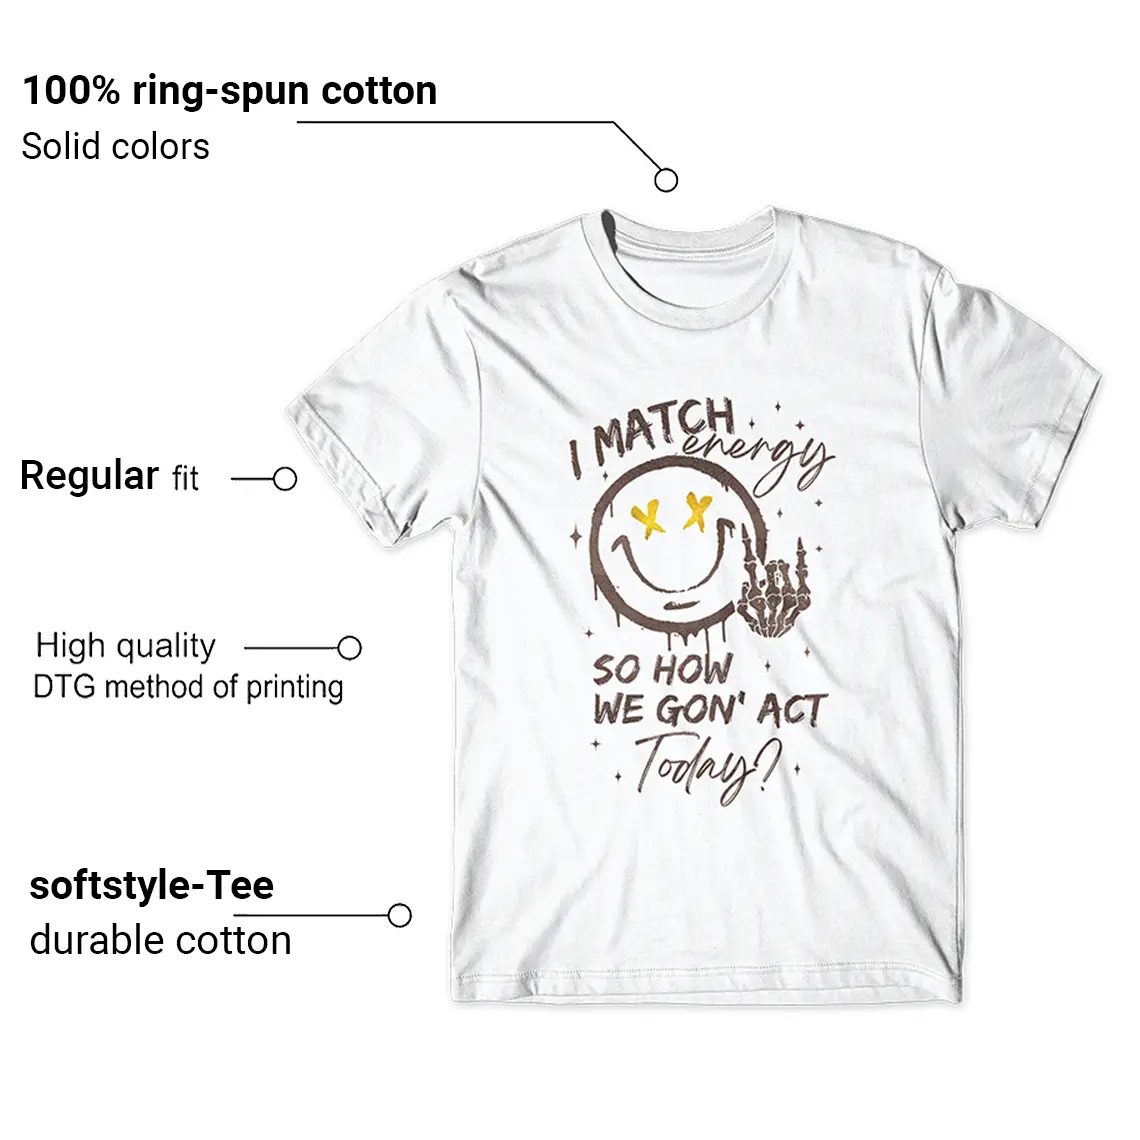 Palomino Jordan 1 White T-shirt Match Energy Graphic Features